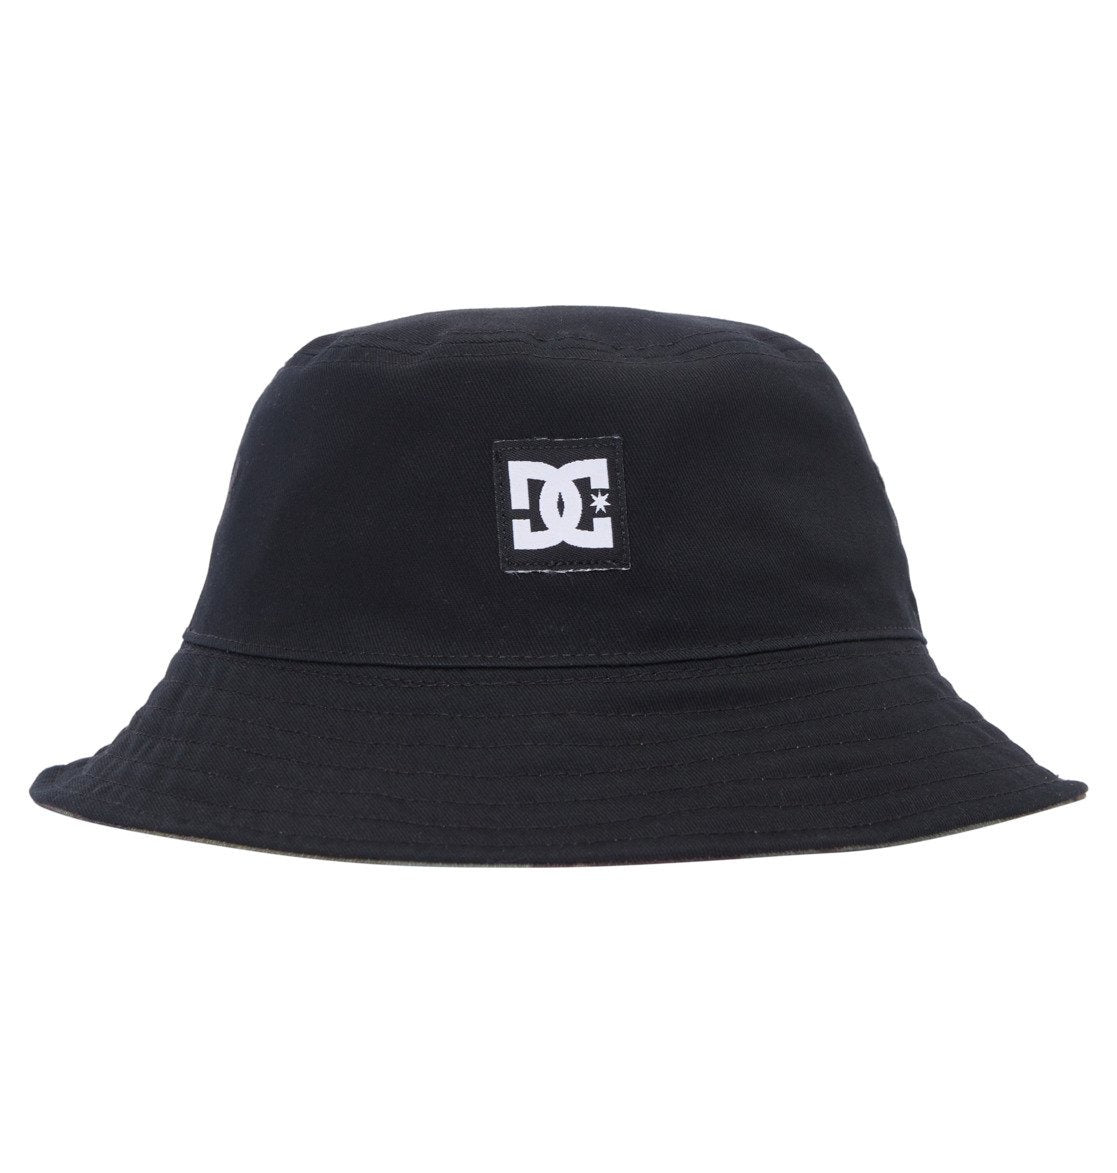 DC SHOES - Deep End Reversible Bucket Hat